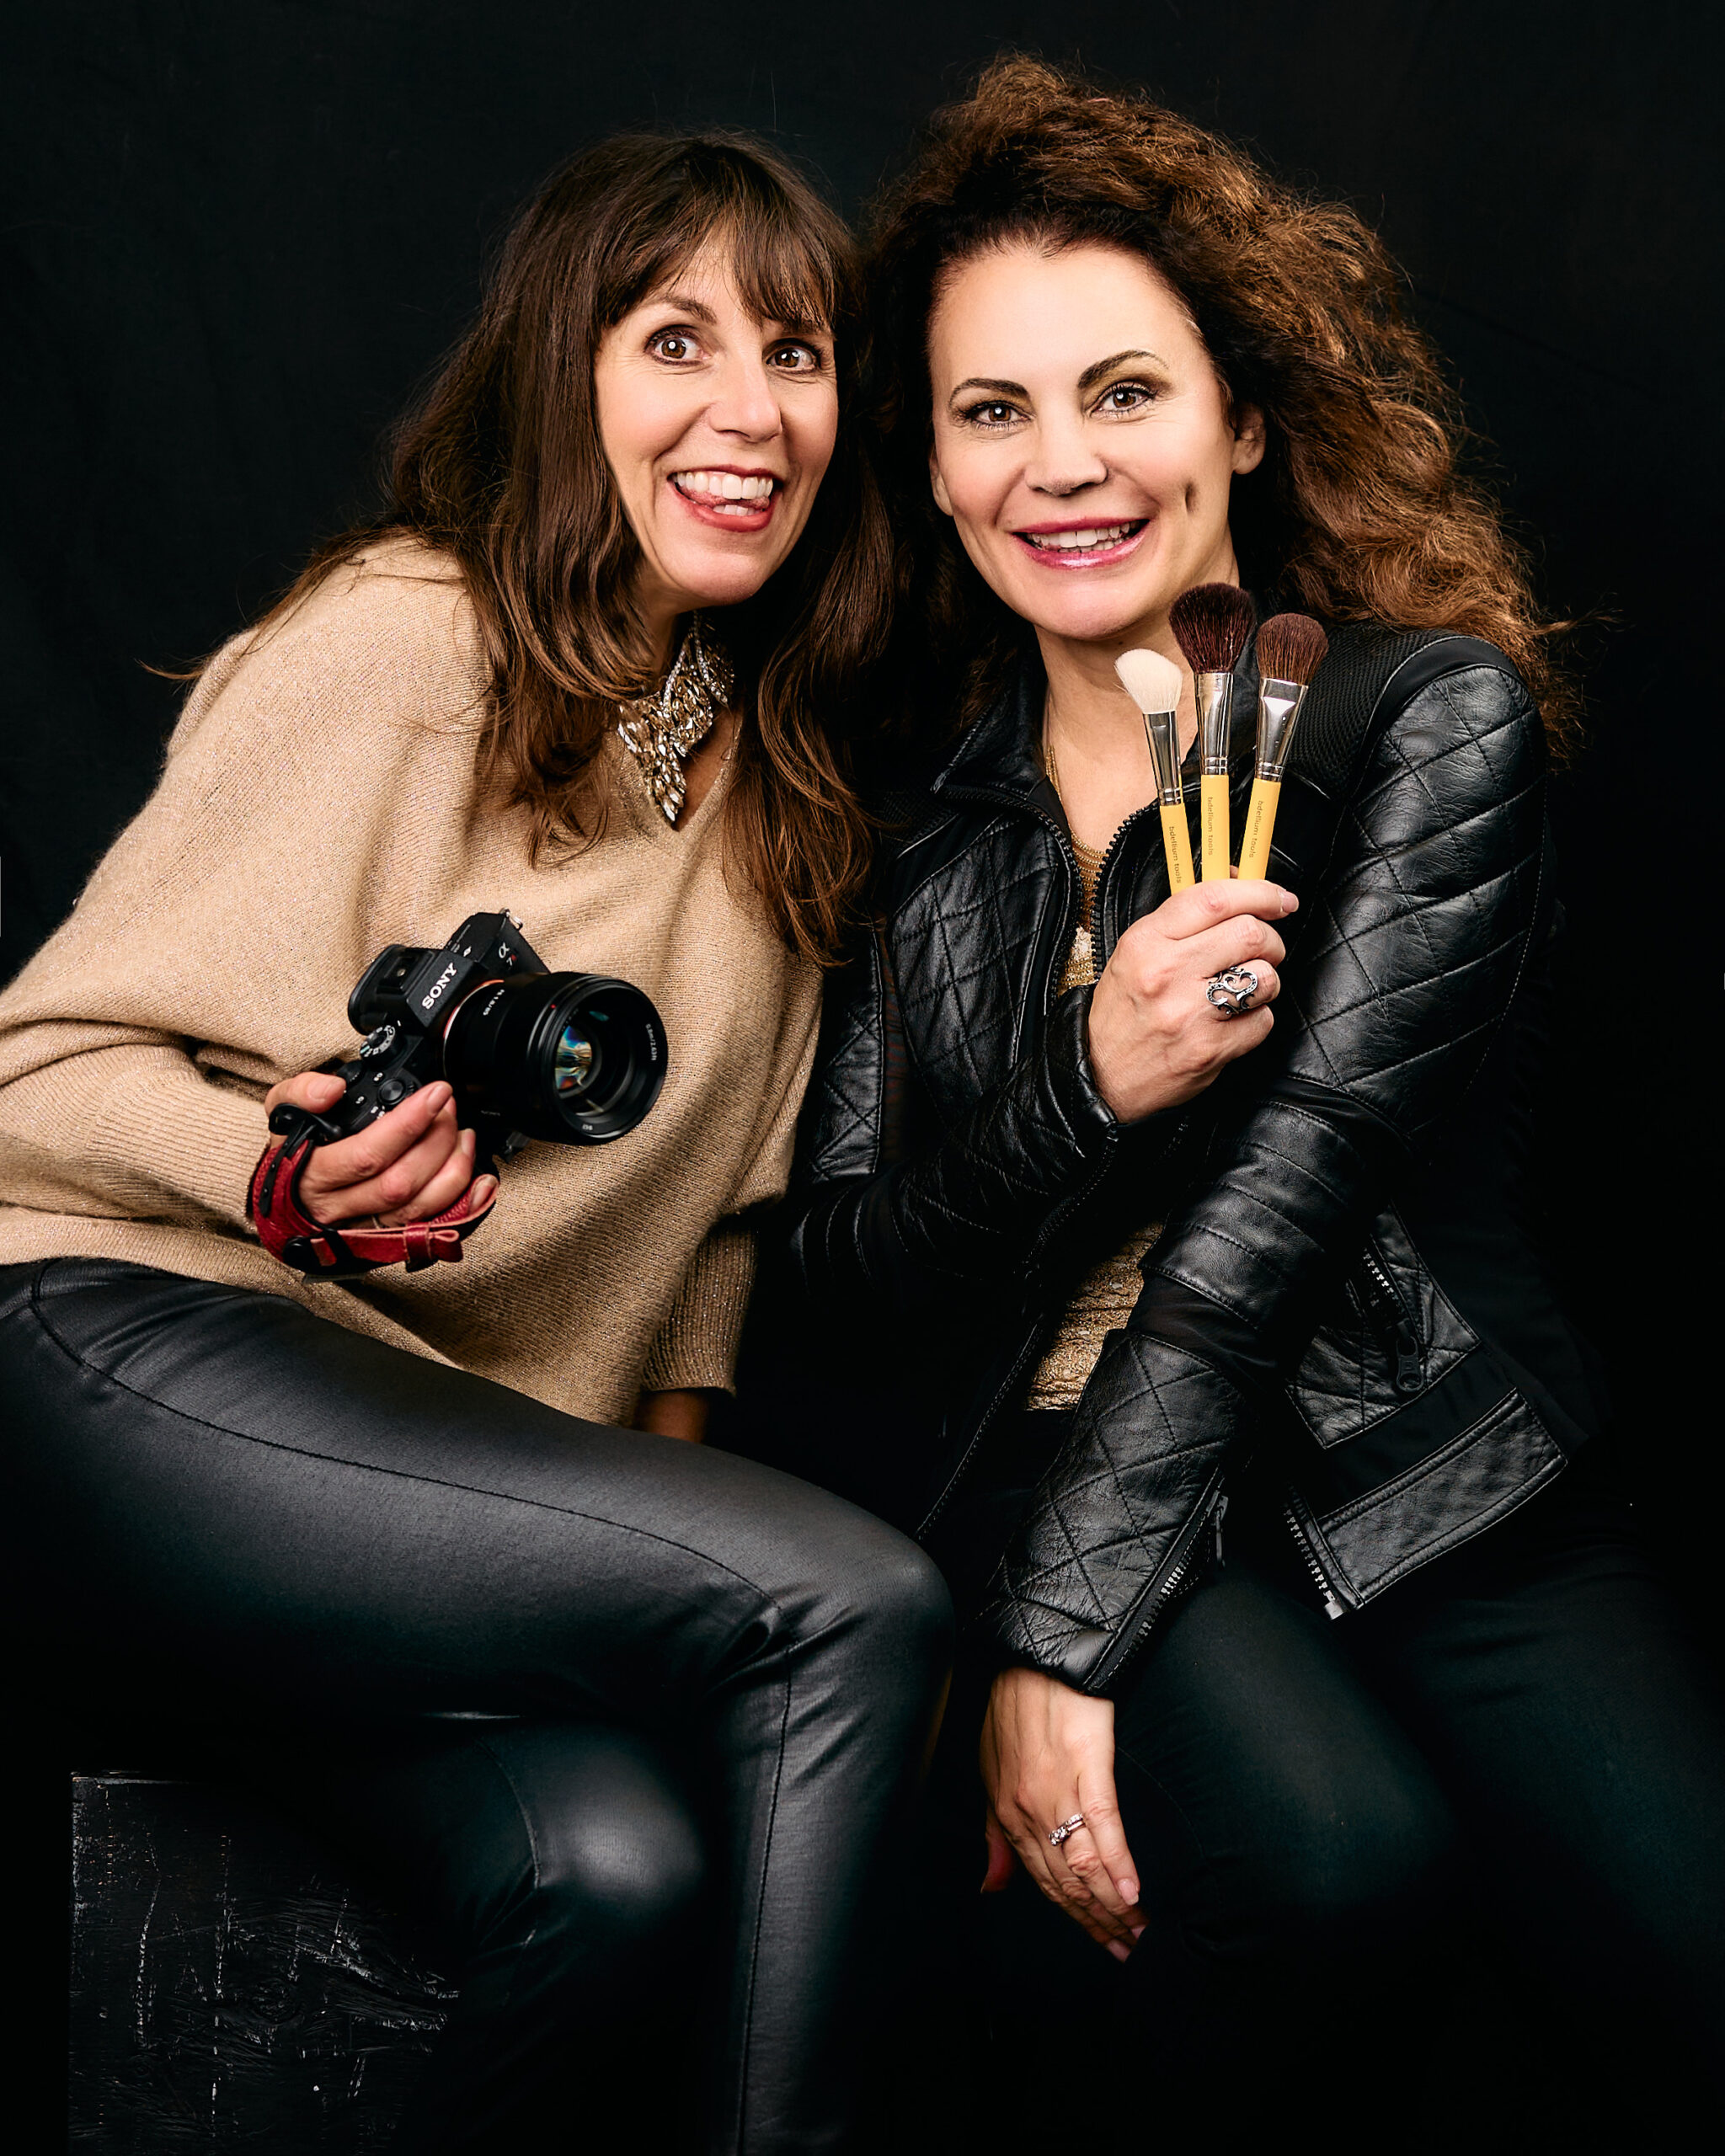 Dena and Tanya posing with camera and makeup brushes